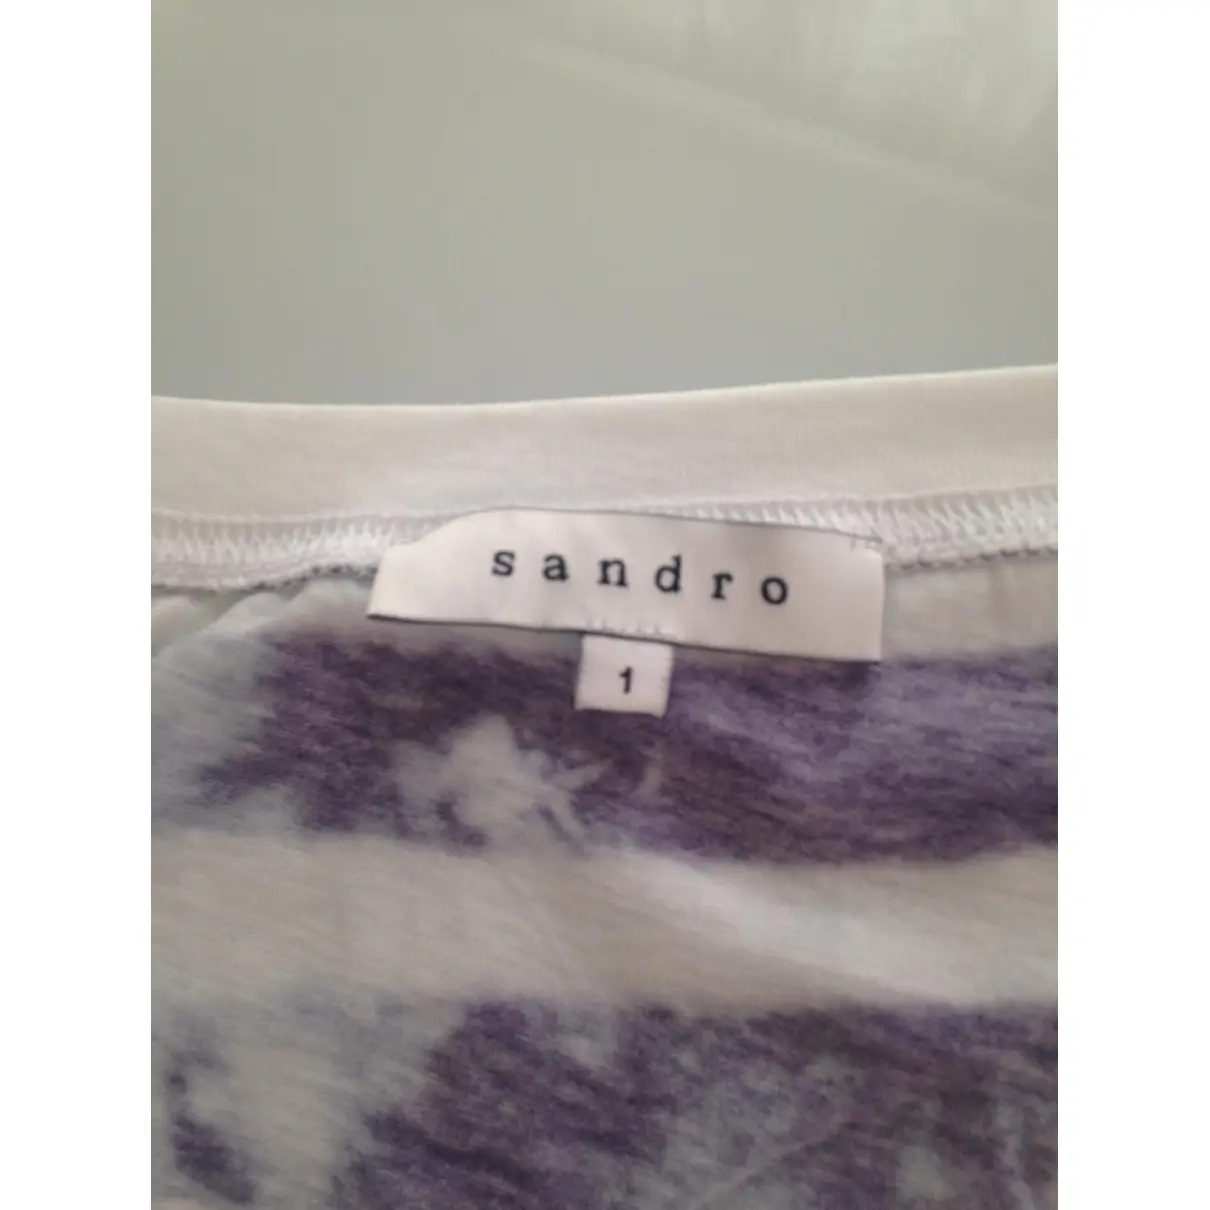 Sandro T-SHIRT for sale